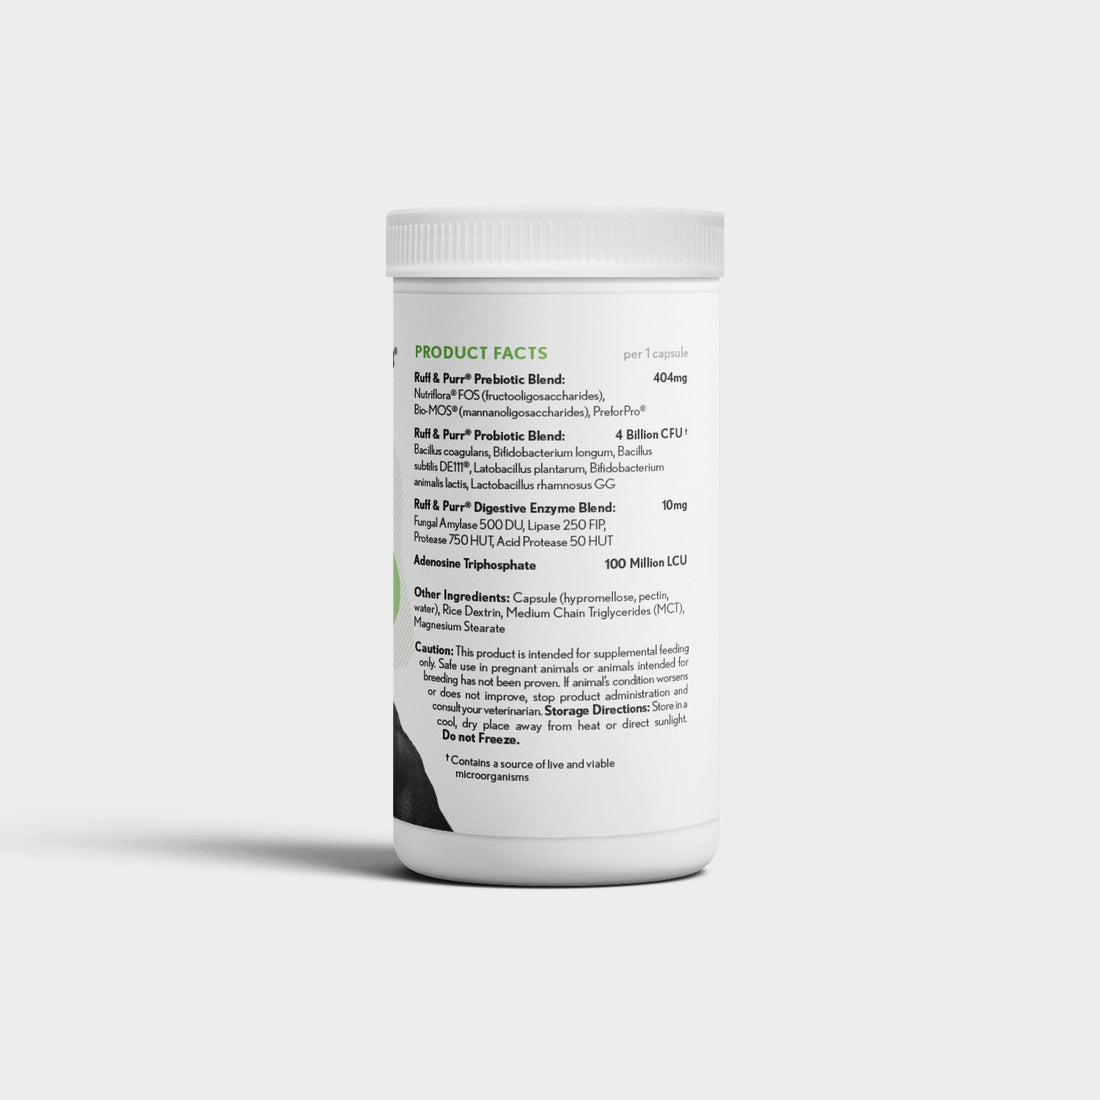 Single Bottle of Ruff & Purr's Restore M3® Supplement Fact Panel